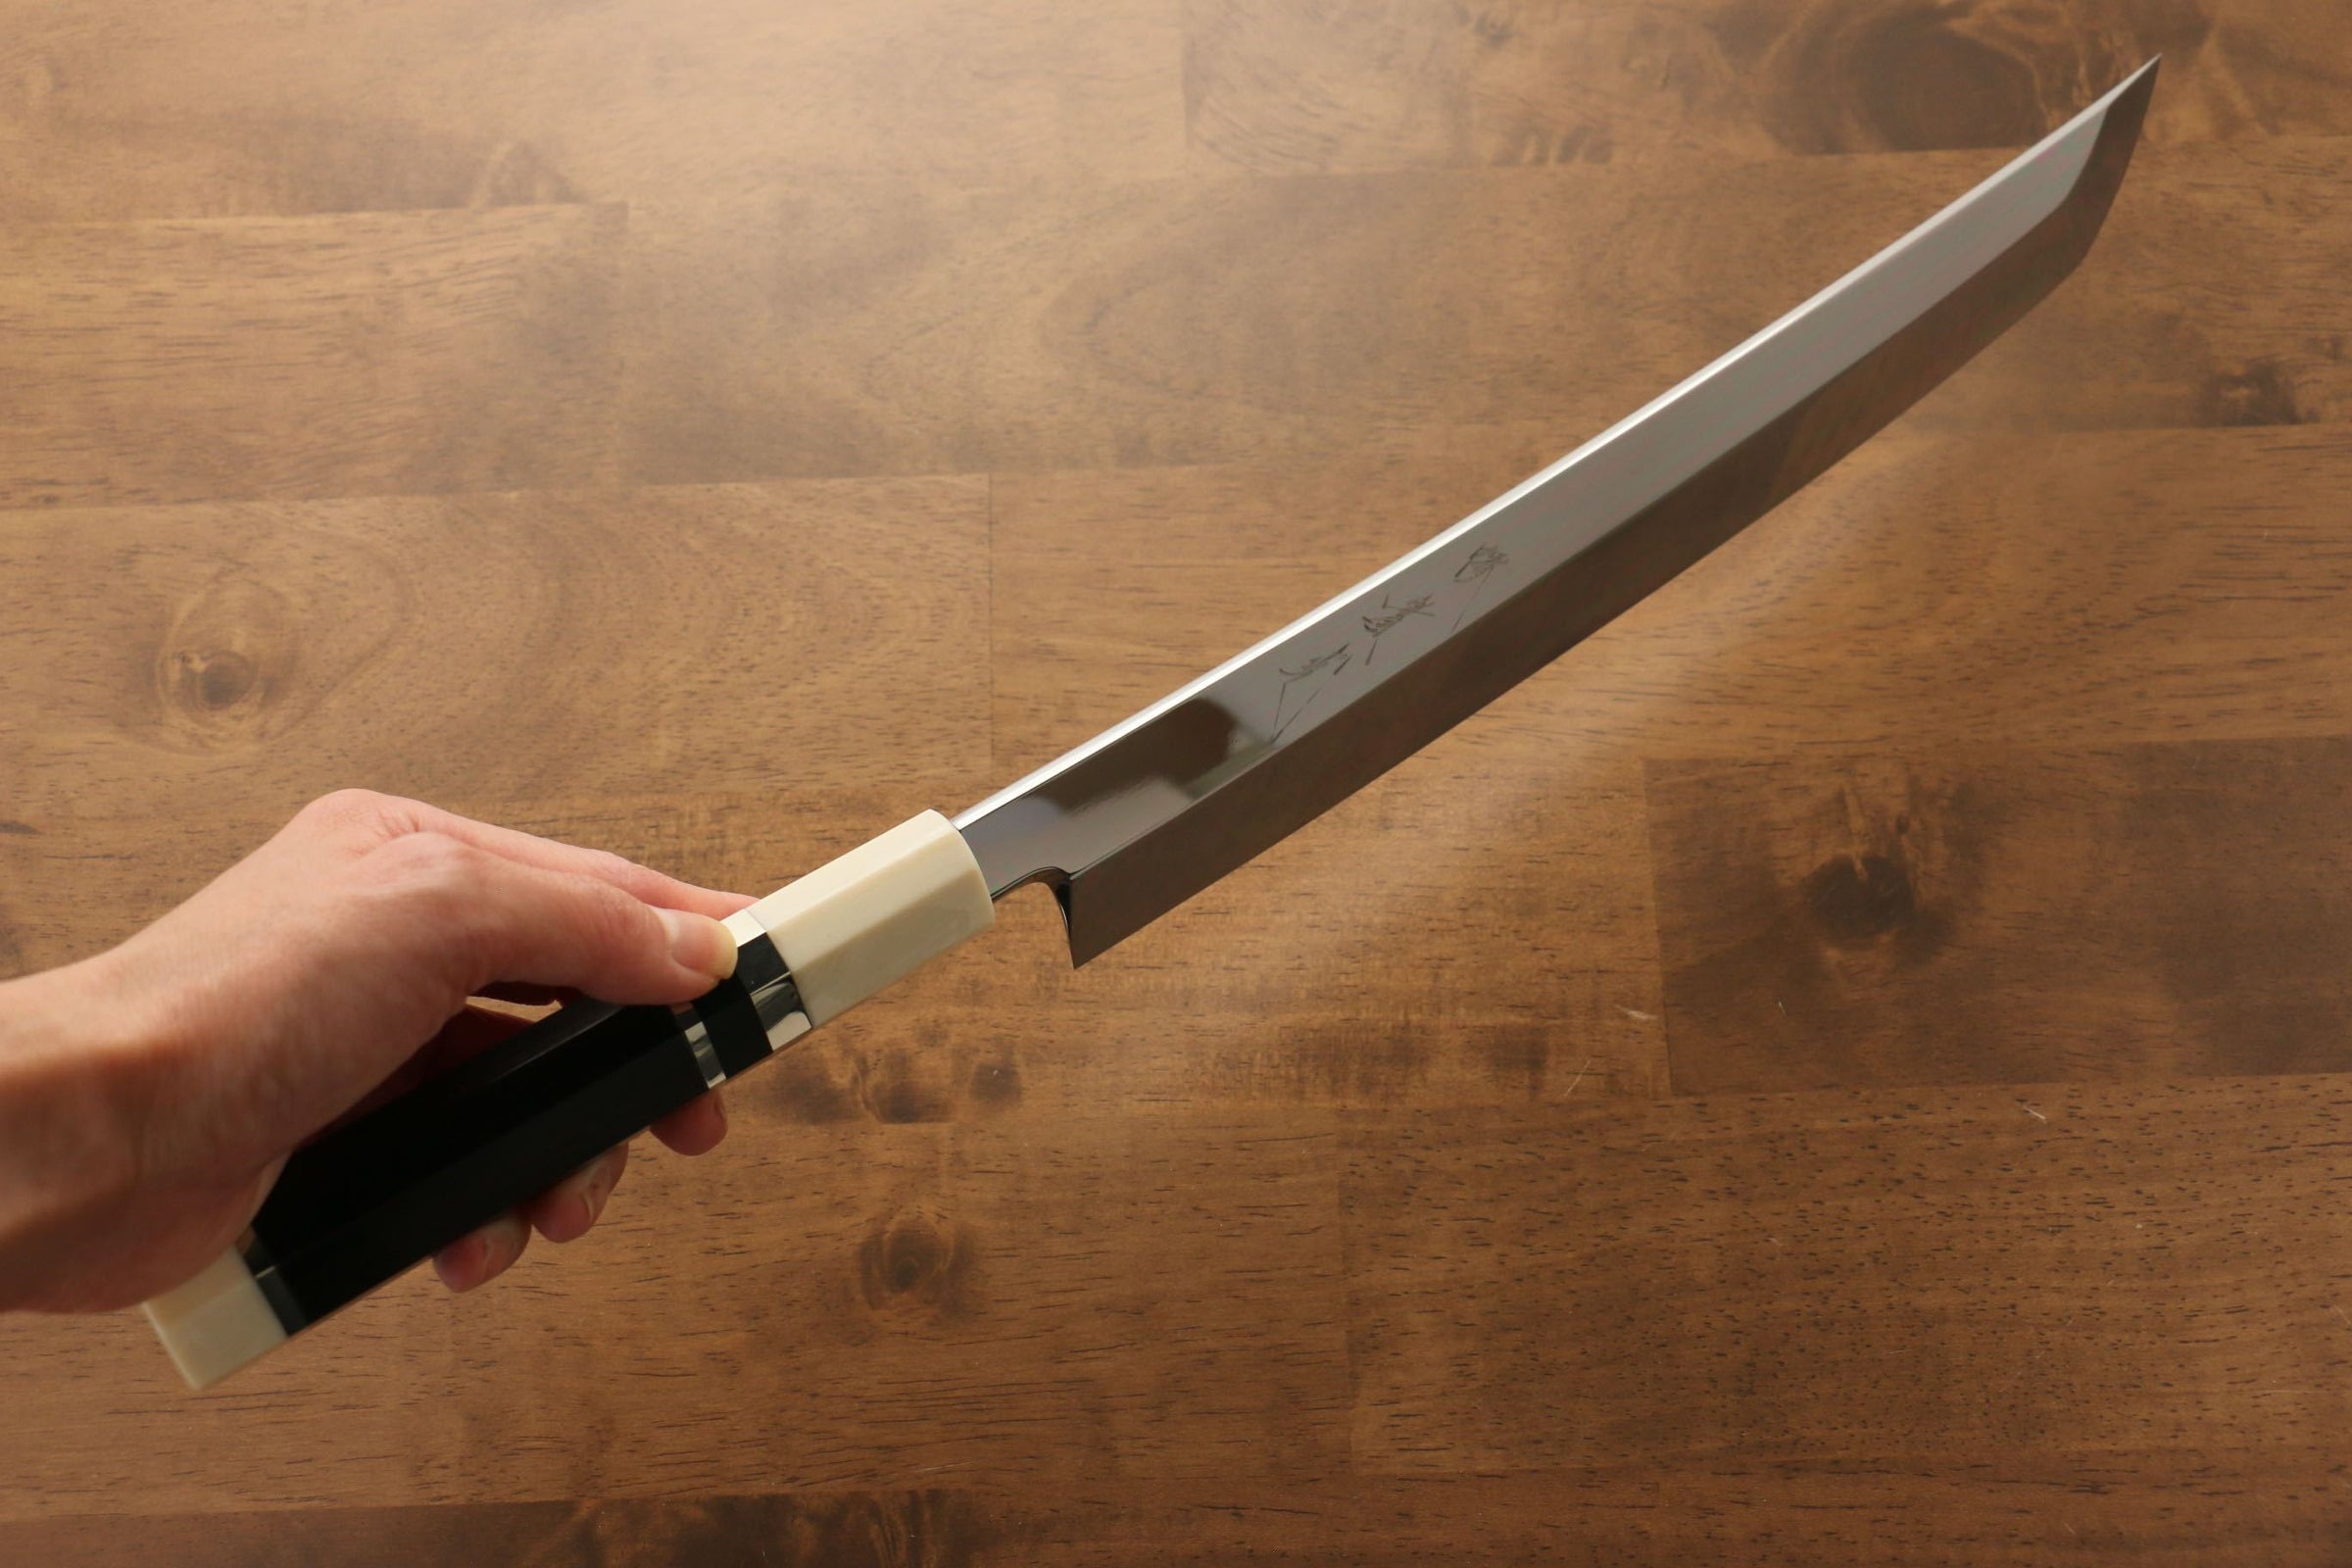 ENOKING Japanese 7 Nakiri Knife Unboxing and Review 